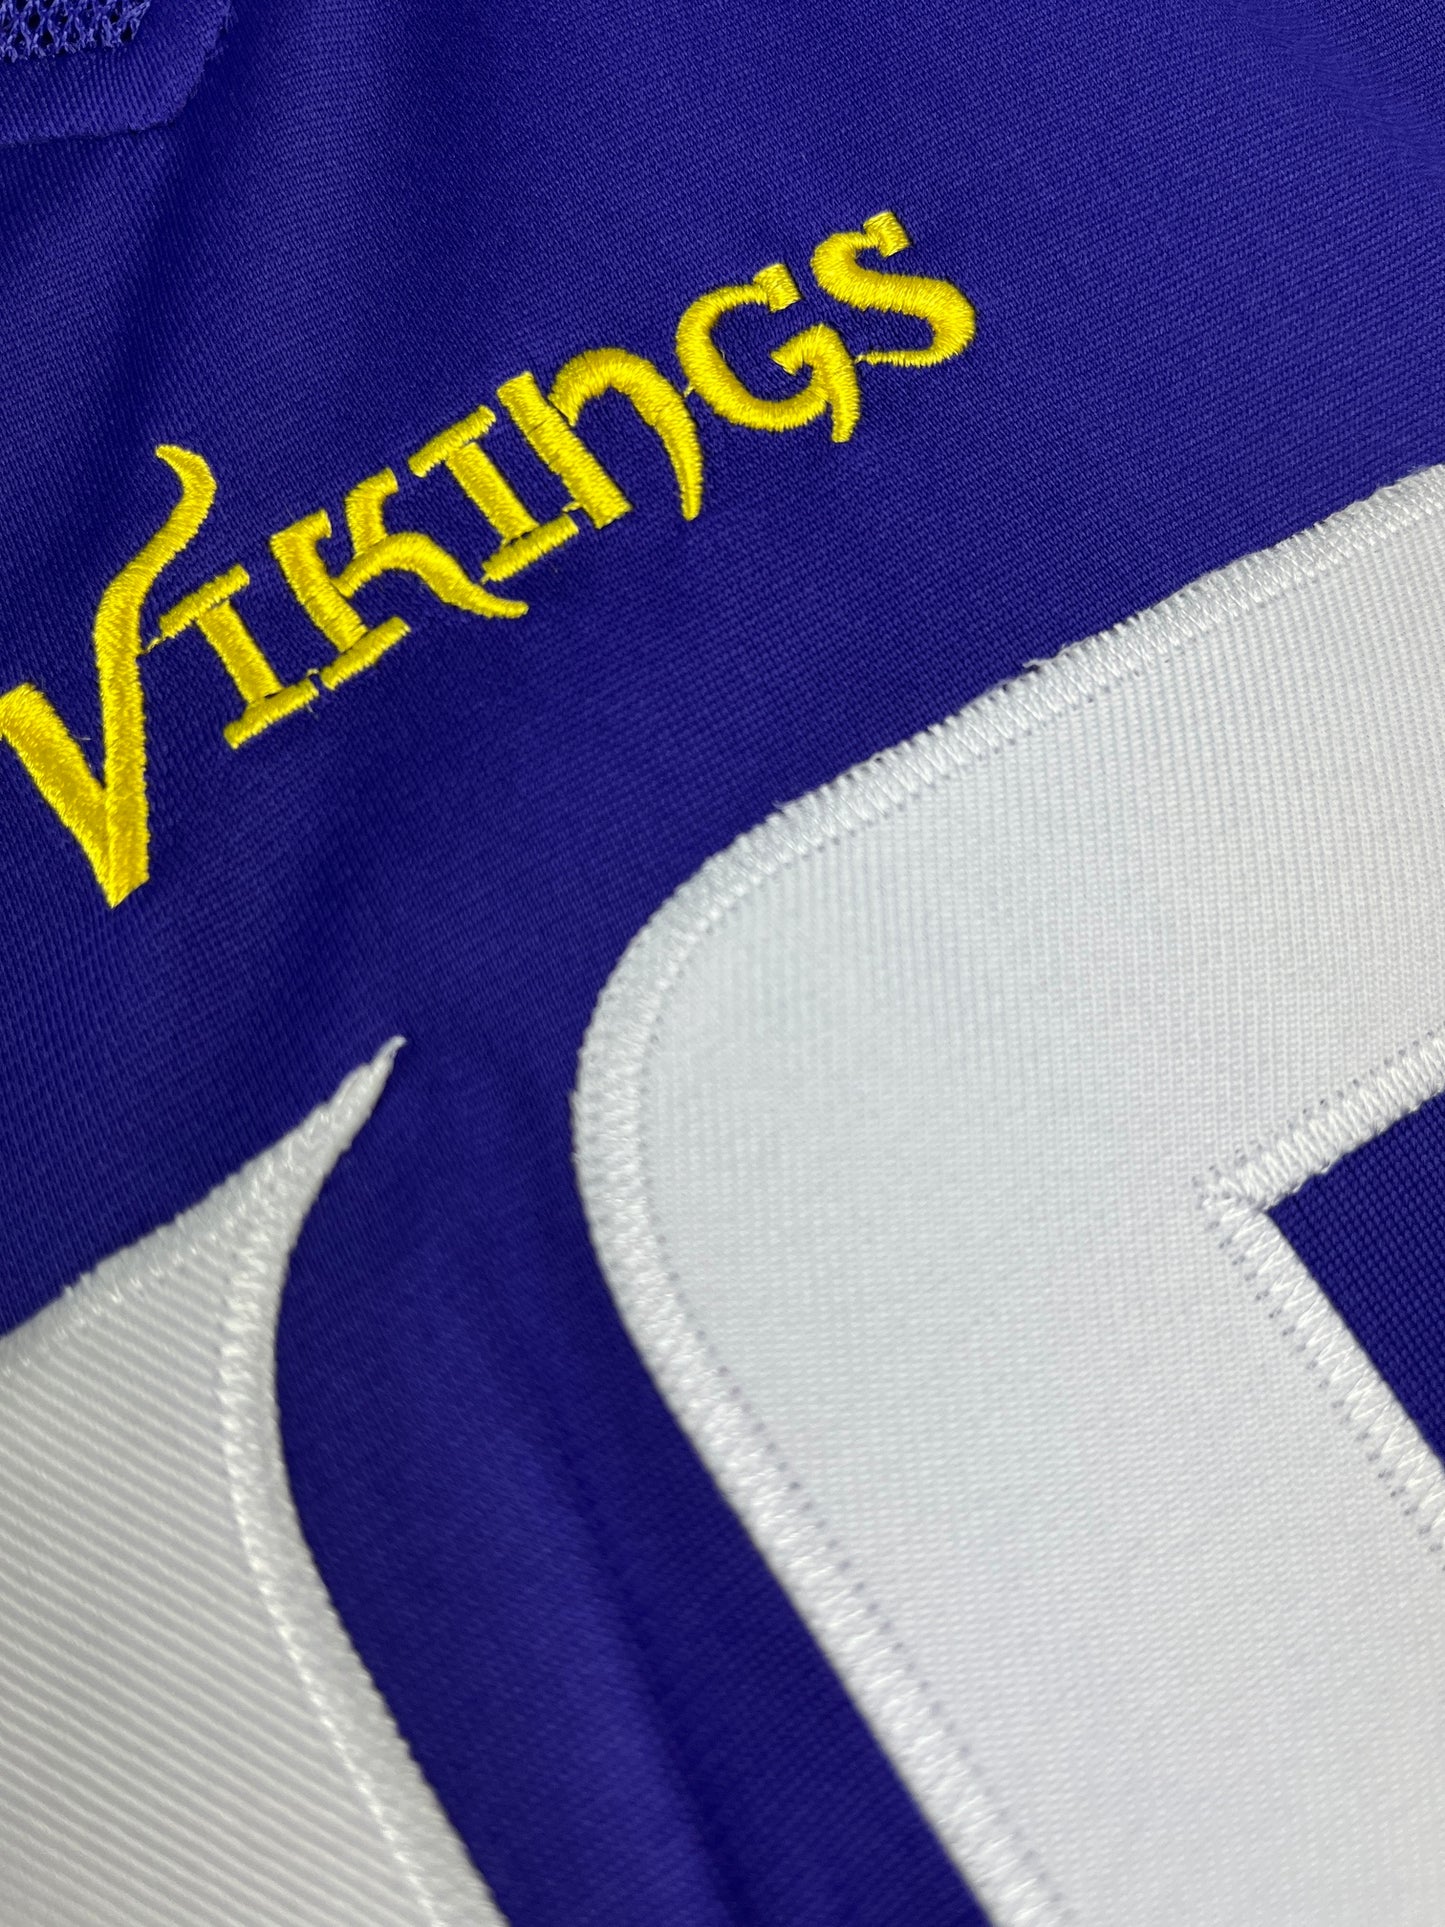 JEFFERSON 18 Purple Minnesota Vikings NFL Jersey